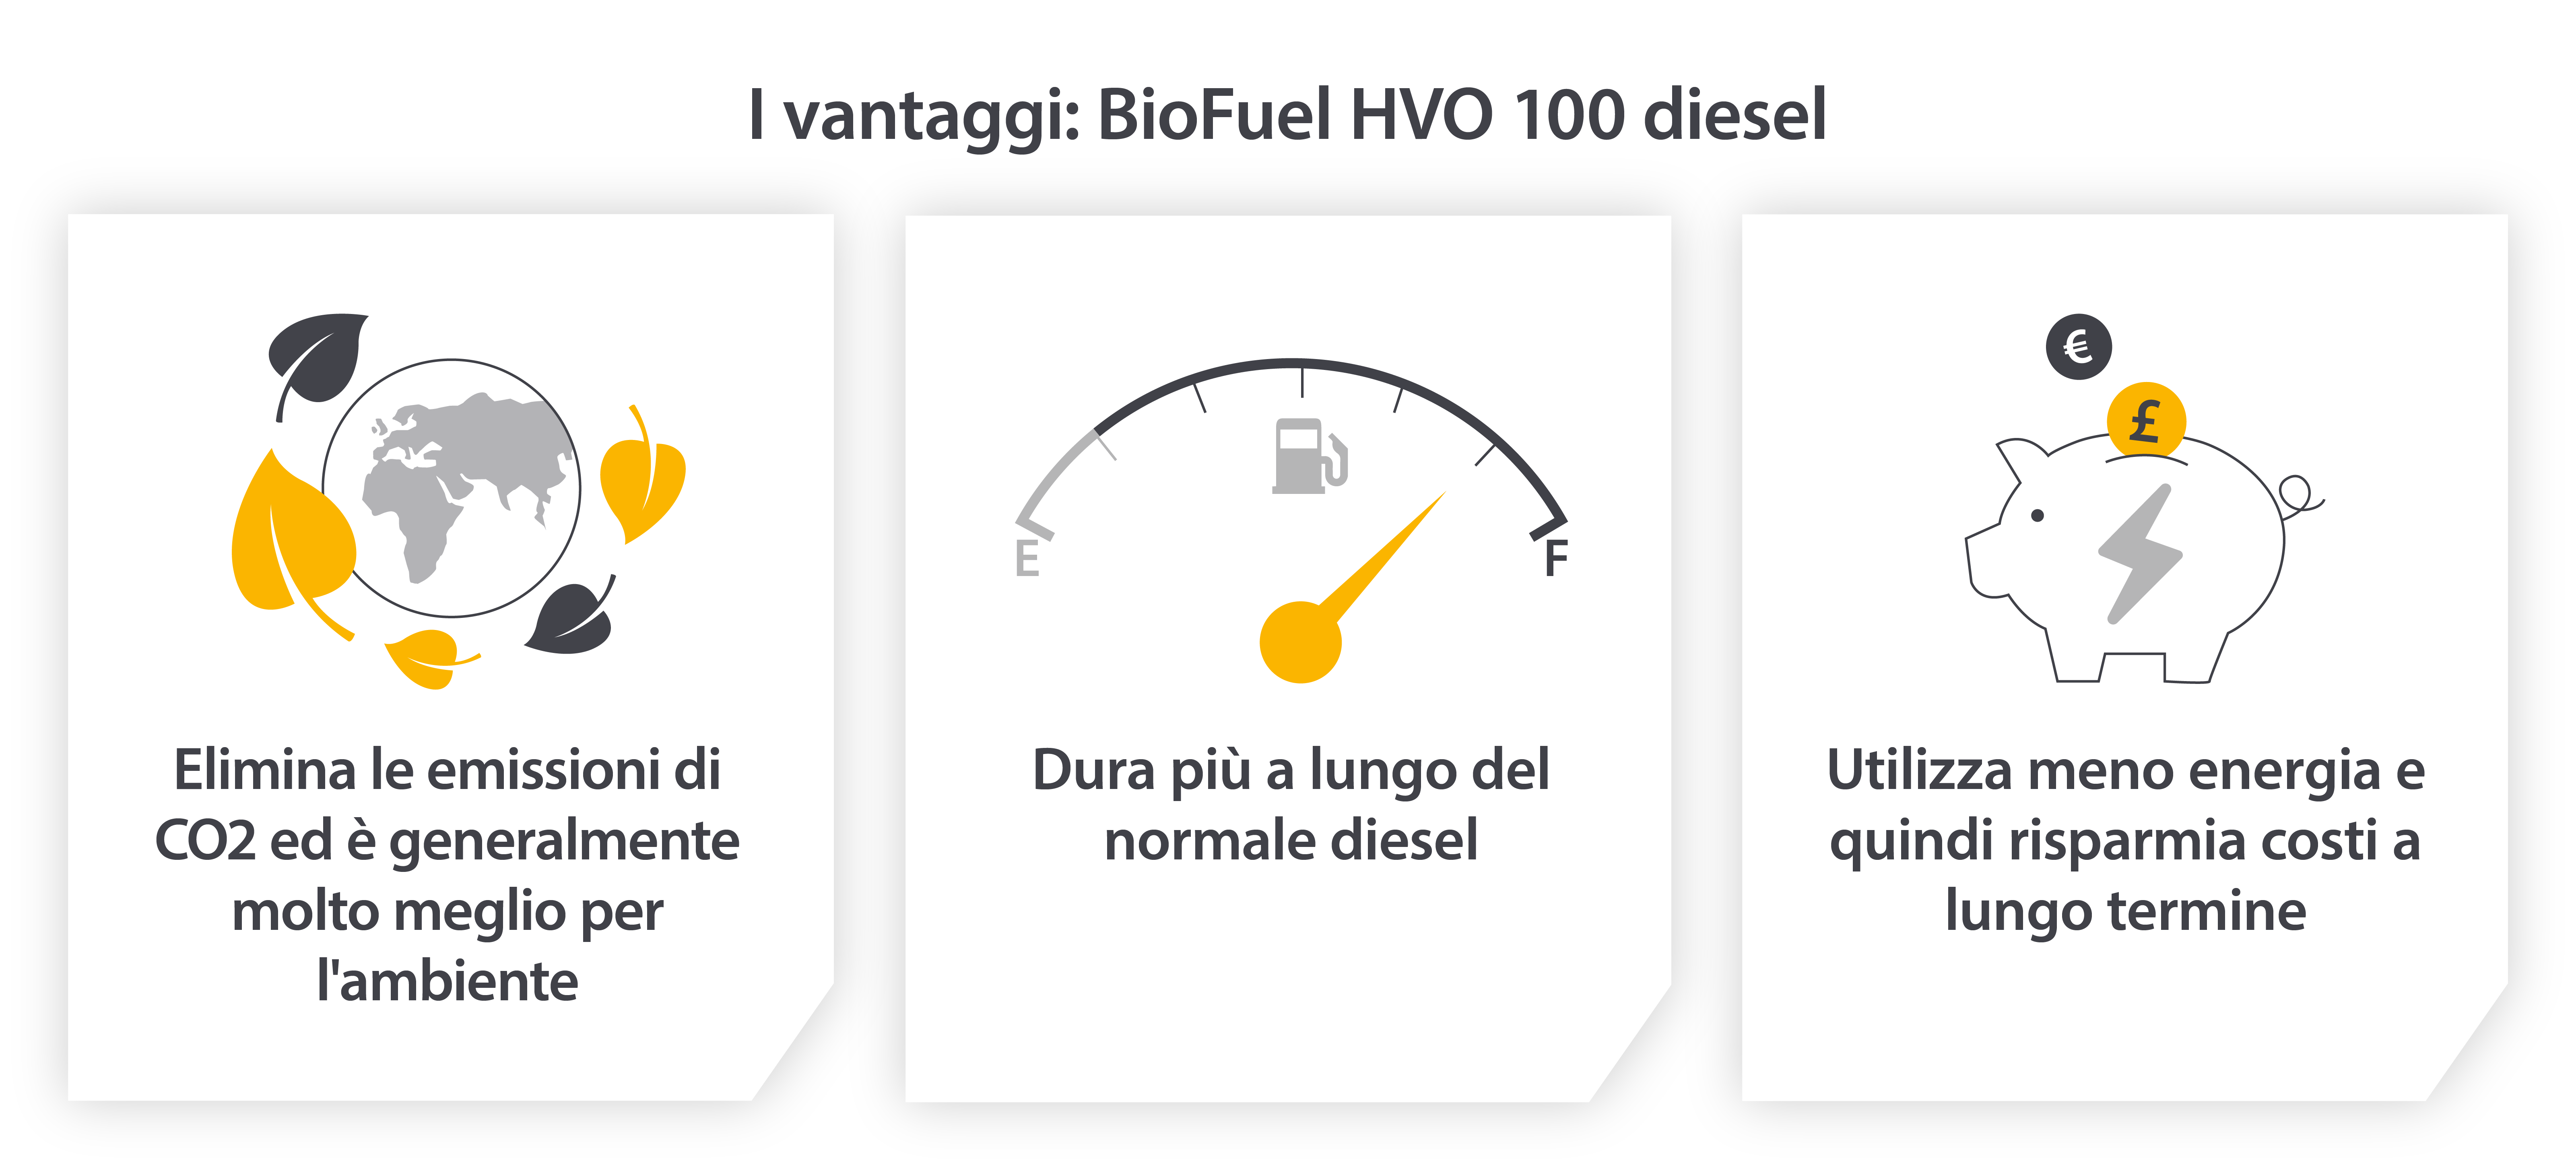 I vantaggi del gasolio BioFuel HVO 100